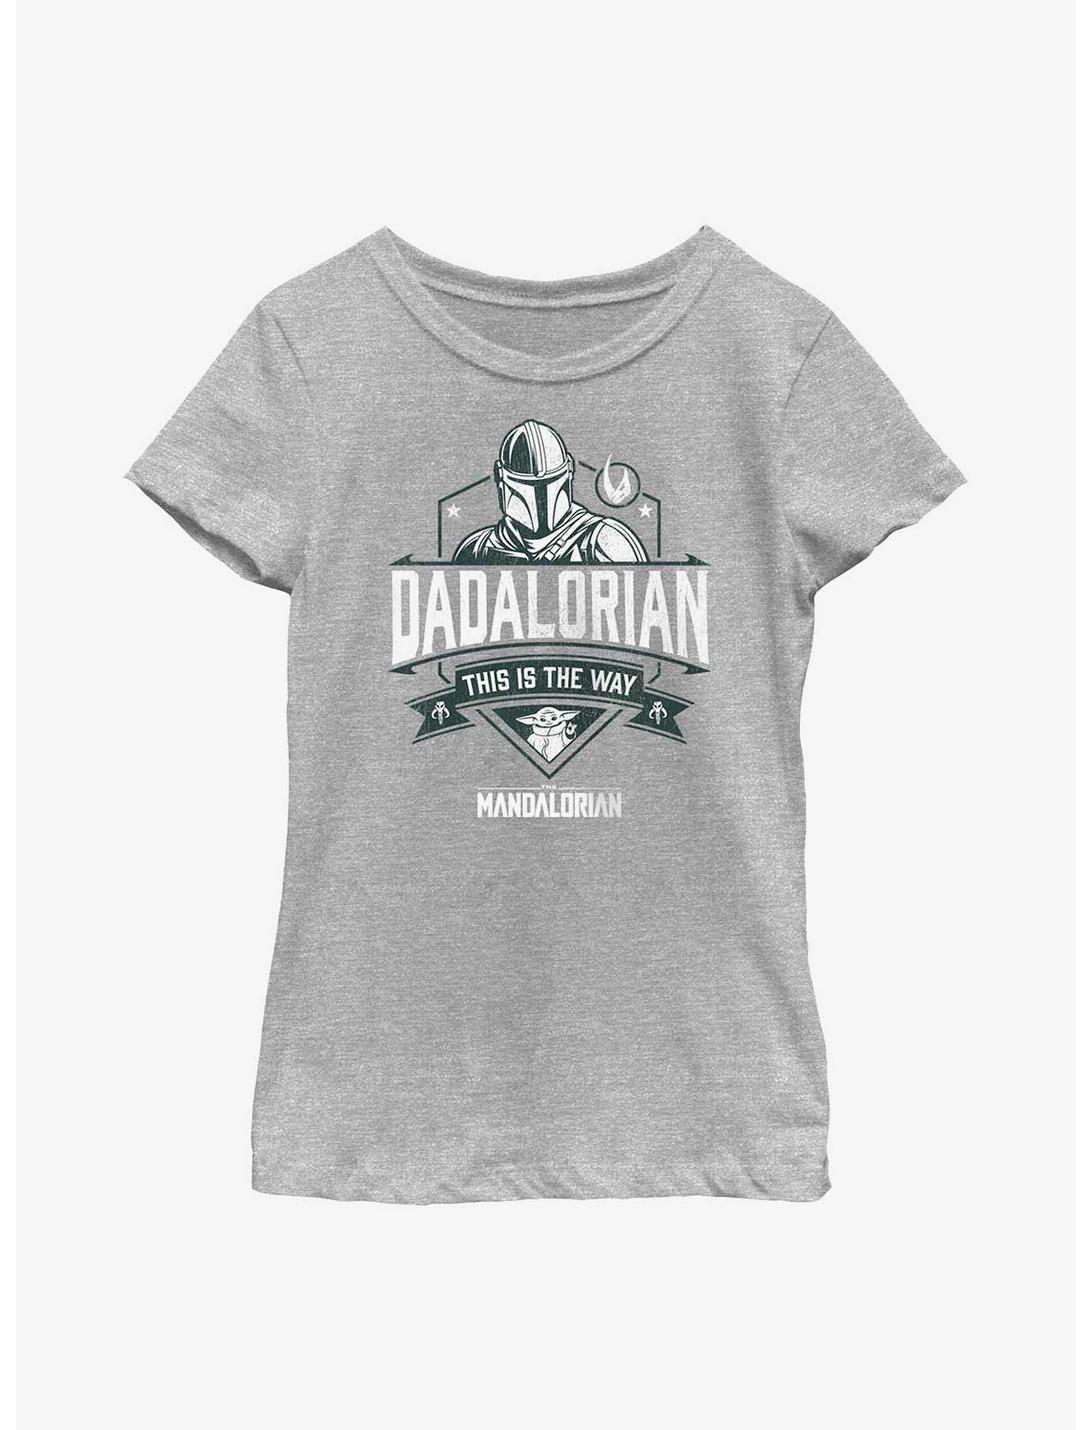 Star Wars The Mandalorian The Dadalorian Way Crest Youth Girls T-Shirt, ATH HTR, hi-res